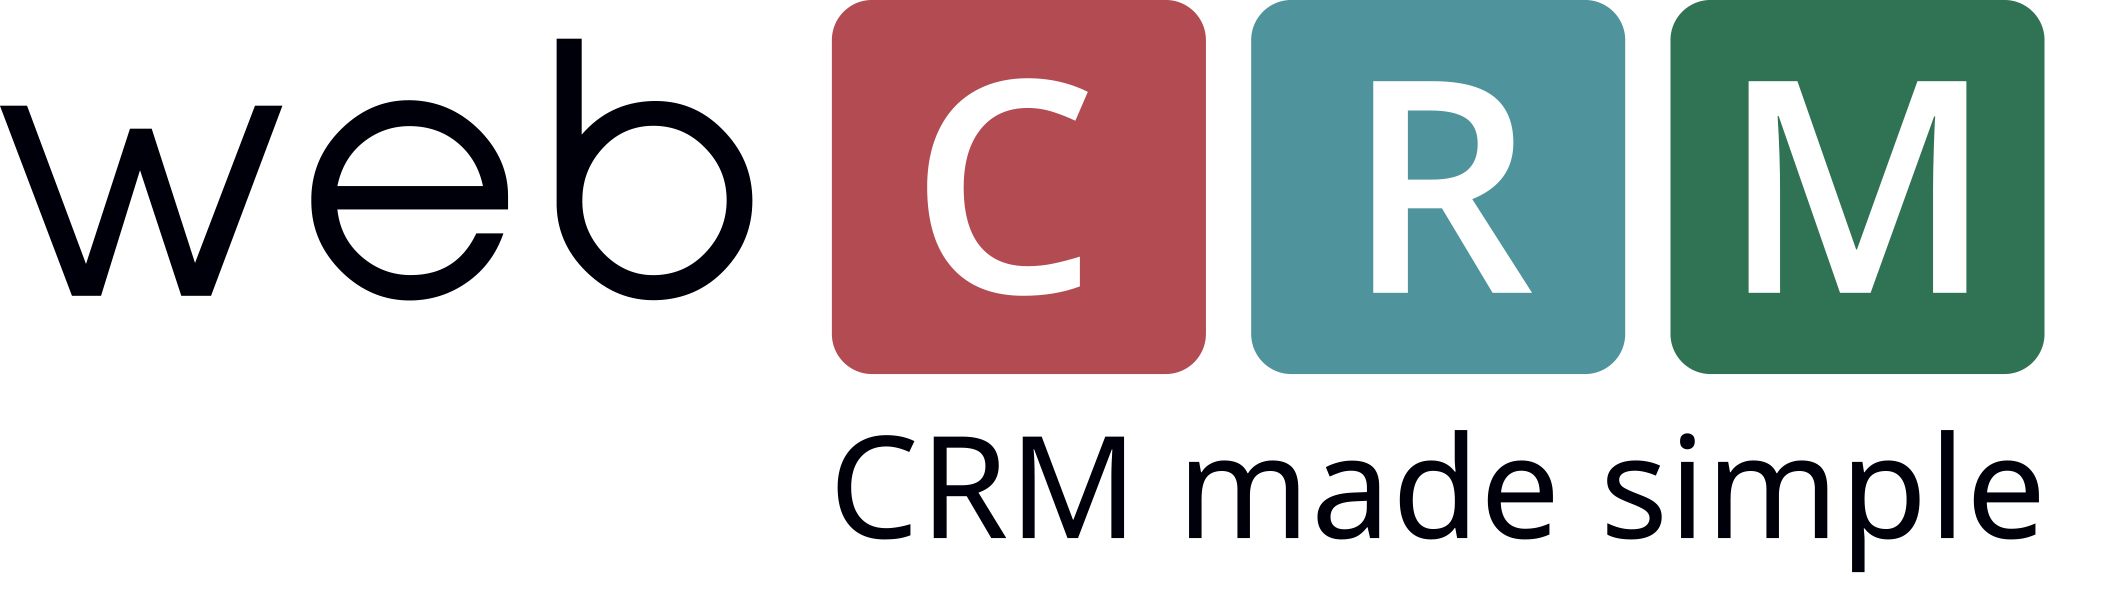 WebCRM_logo